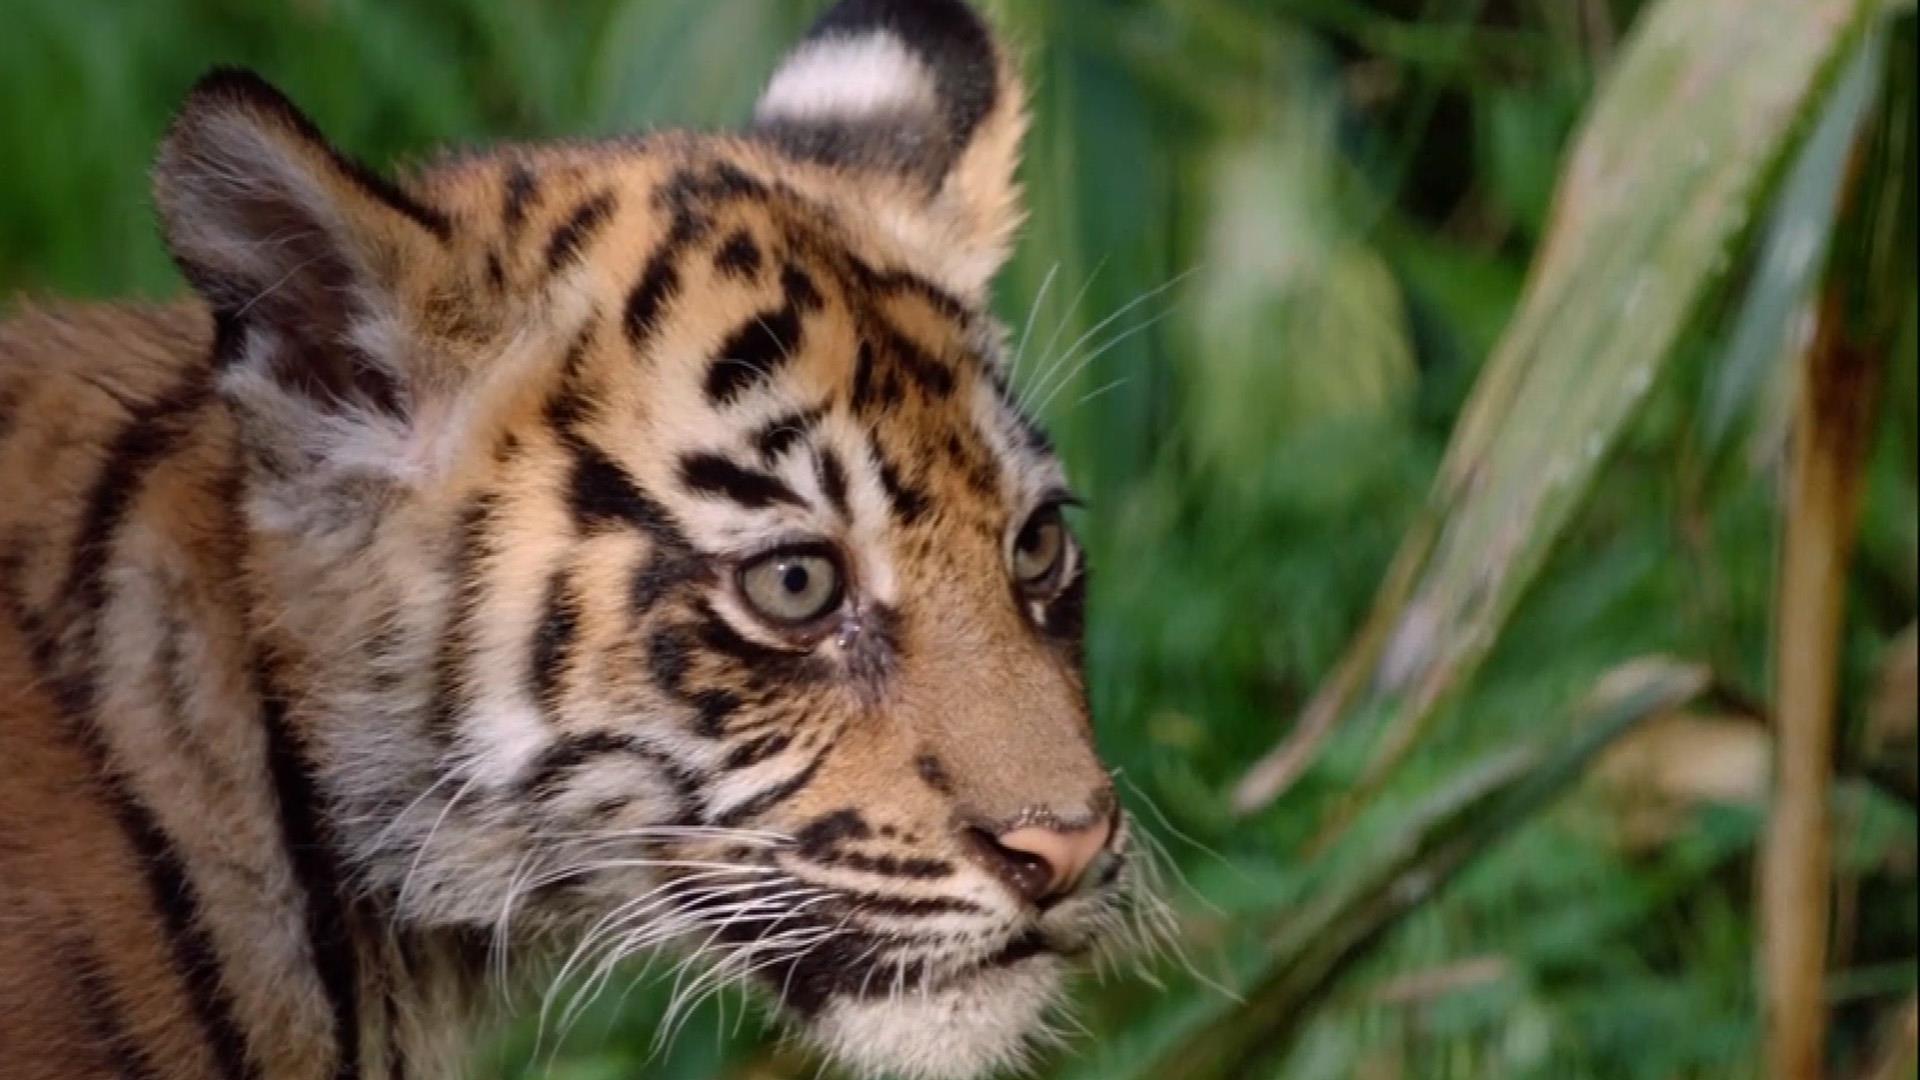 Tiny Roar! Adorable Tiger Cubs Make Debut - NBC News